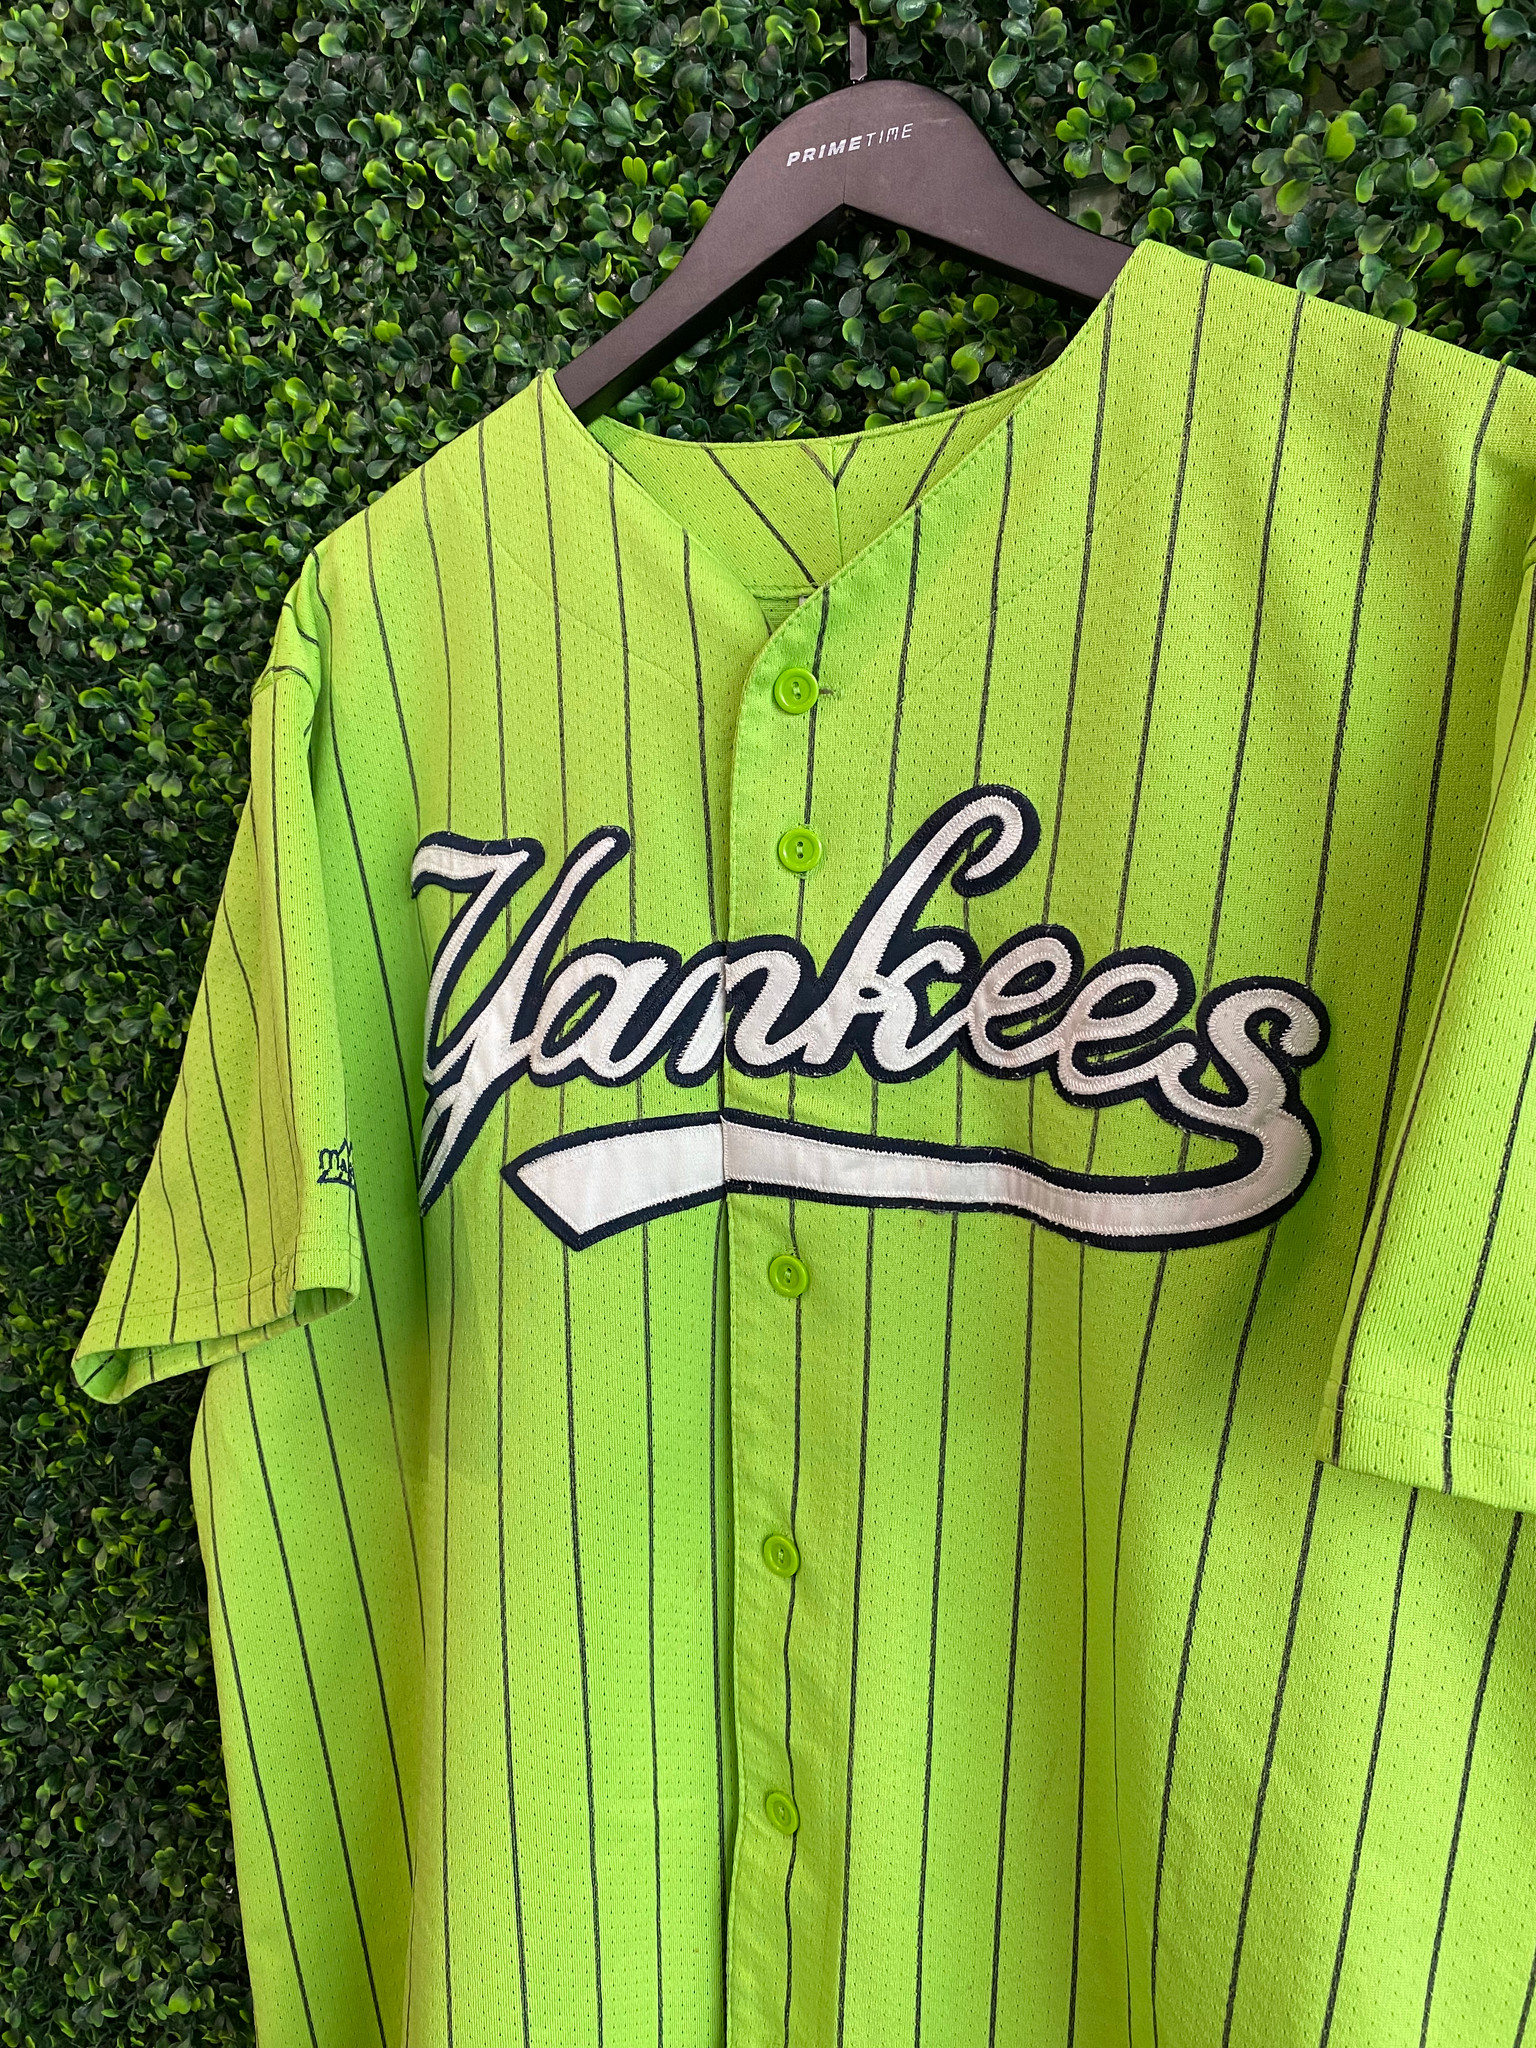 Majestic, Shirts, Rare Majestic Vintage Ny Yankees Jersey Size Xxl